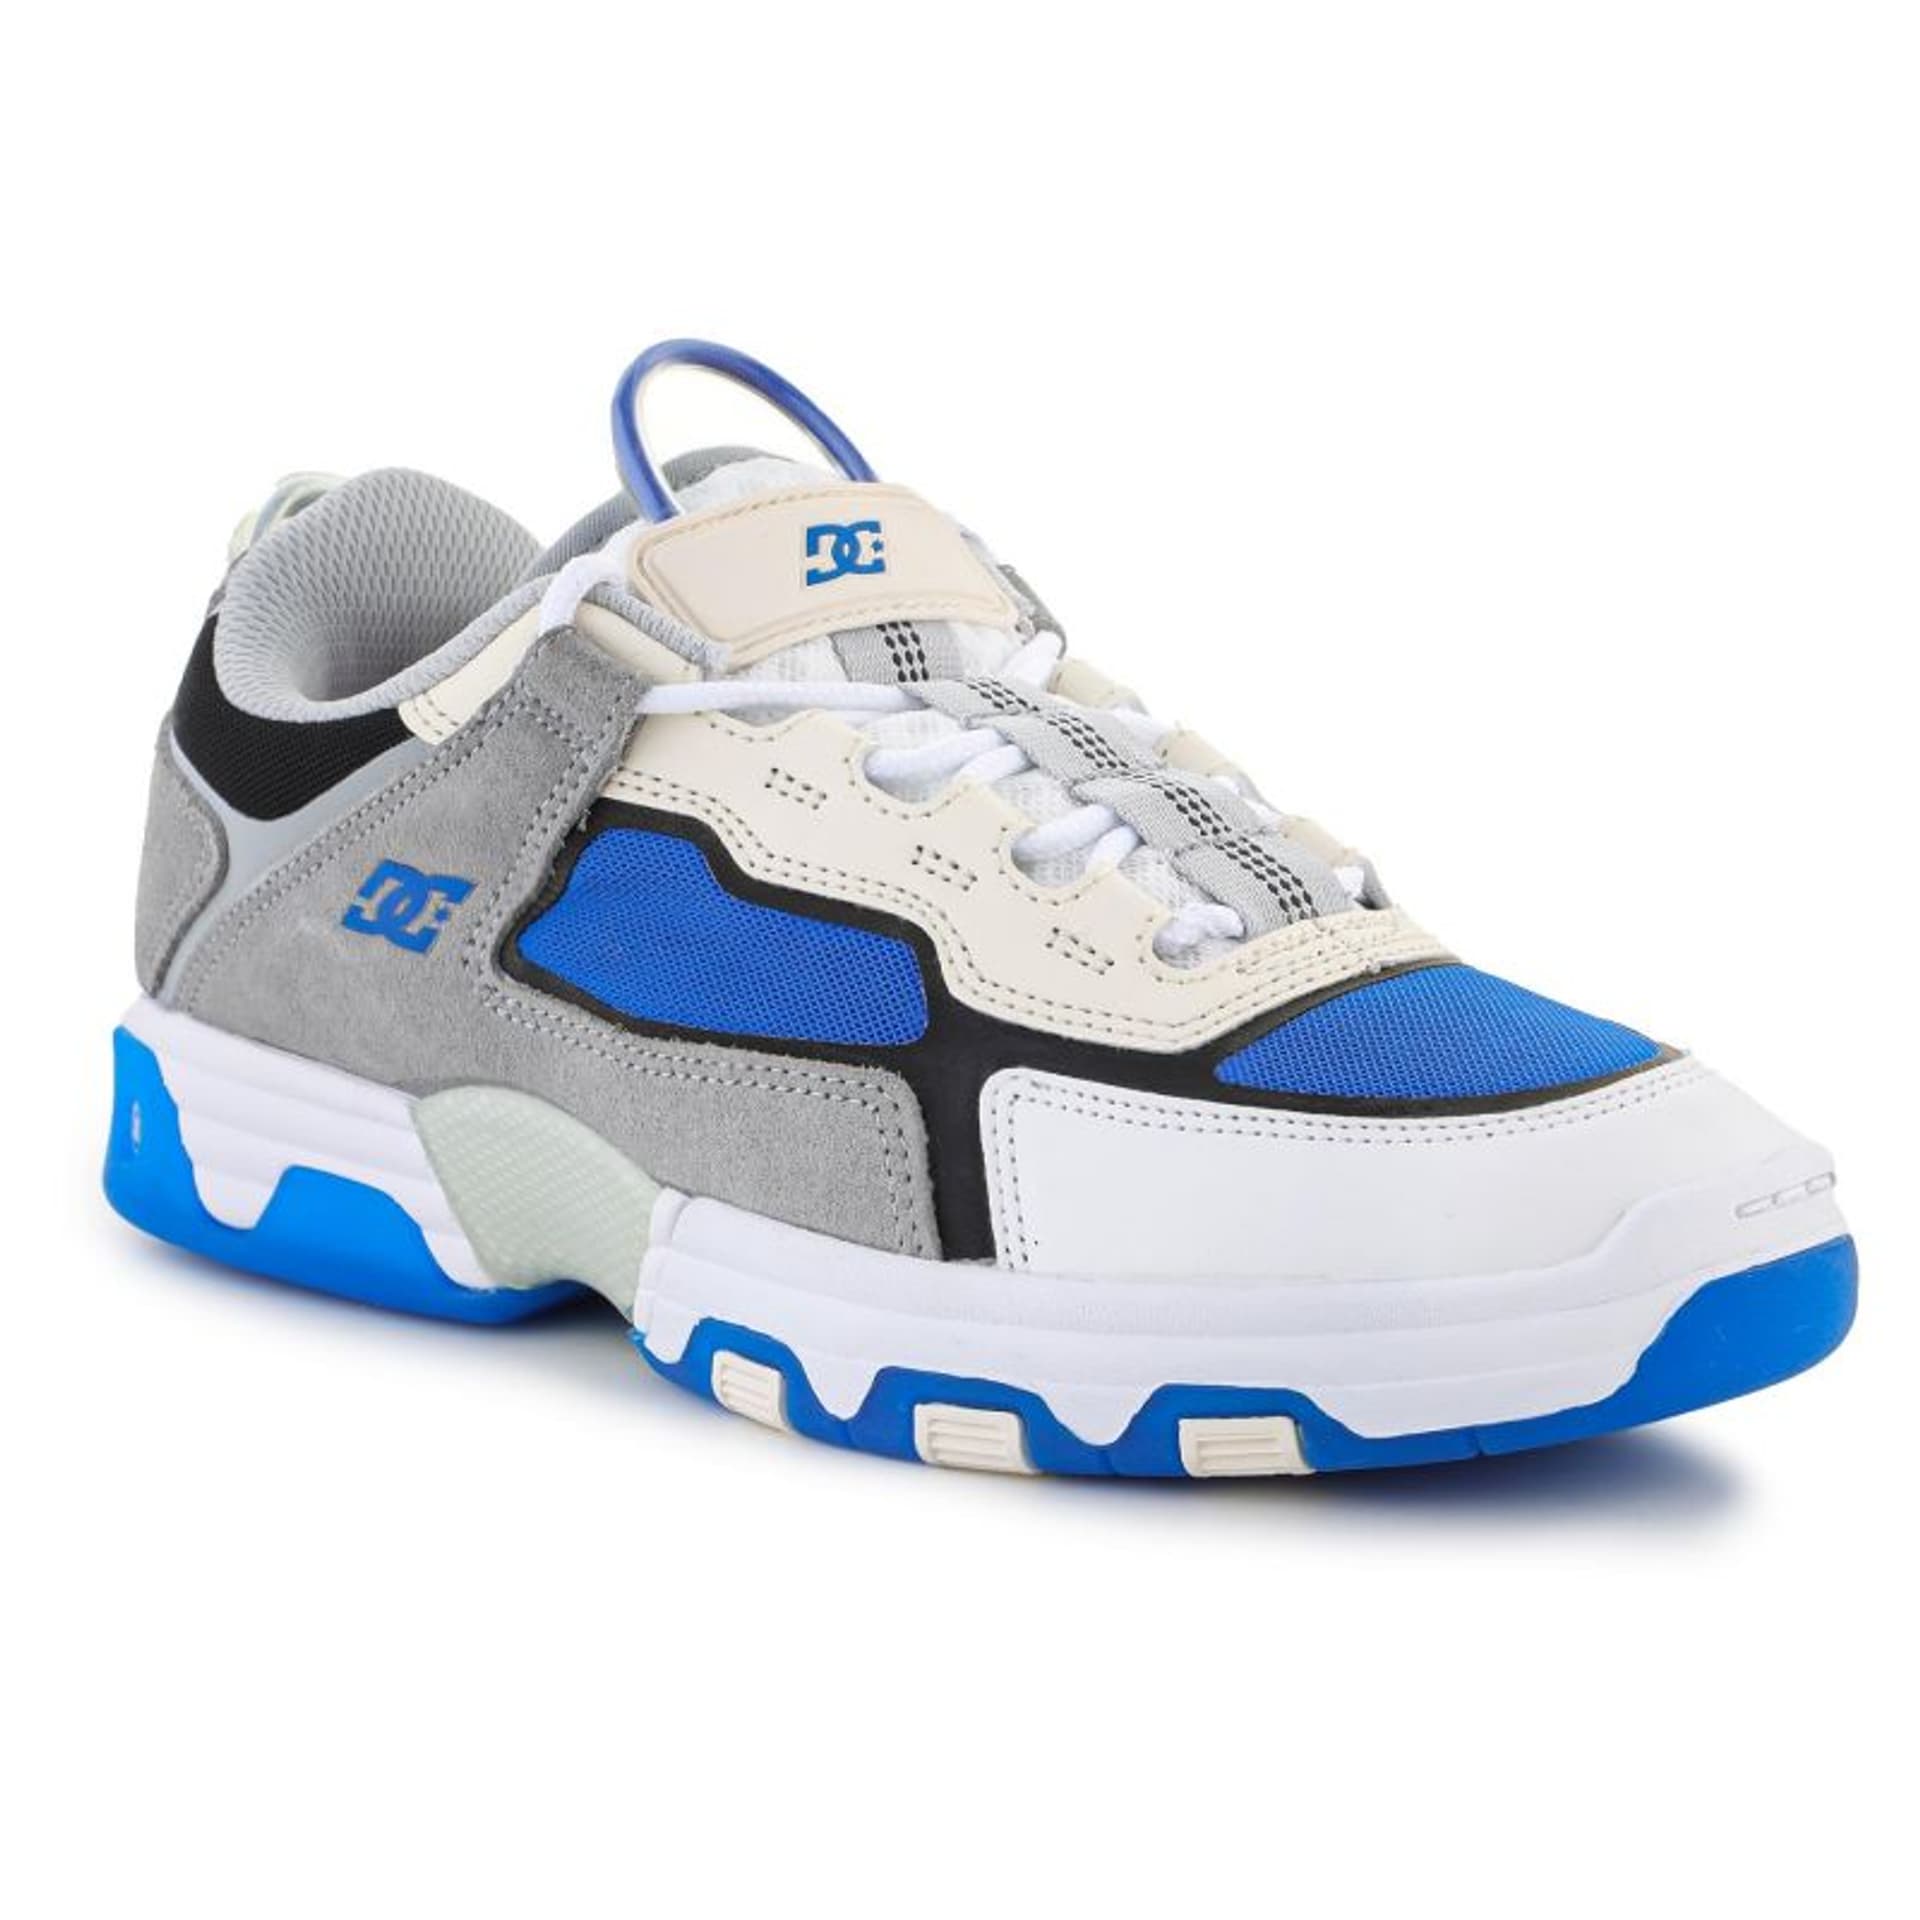 Buty DC Shoes Shanahan Metric Skate Shoes M (kolor Biały. Niebieski. Szary/Srebrny, rozmiar EU 42)